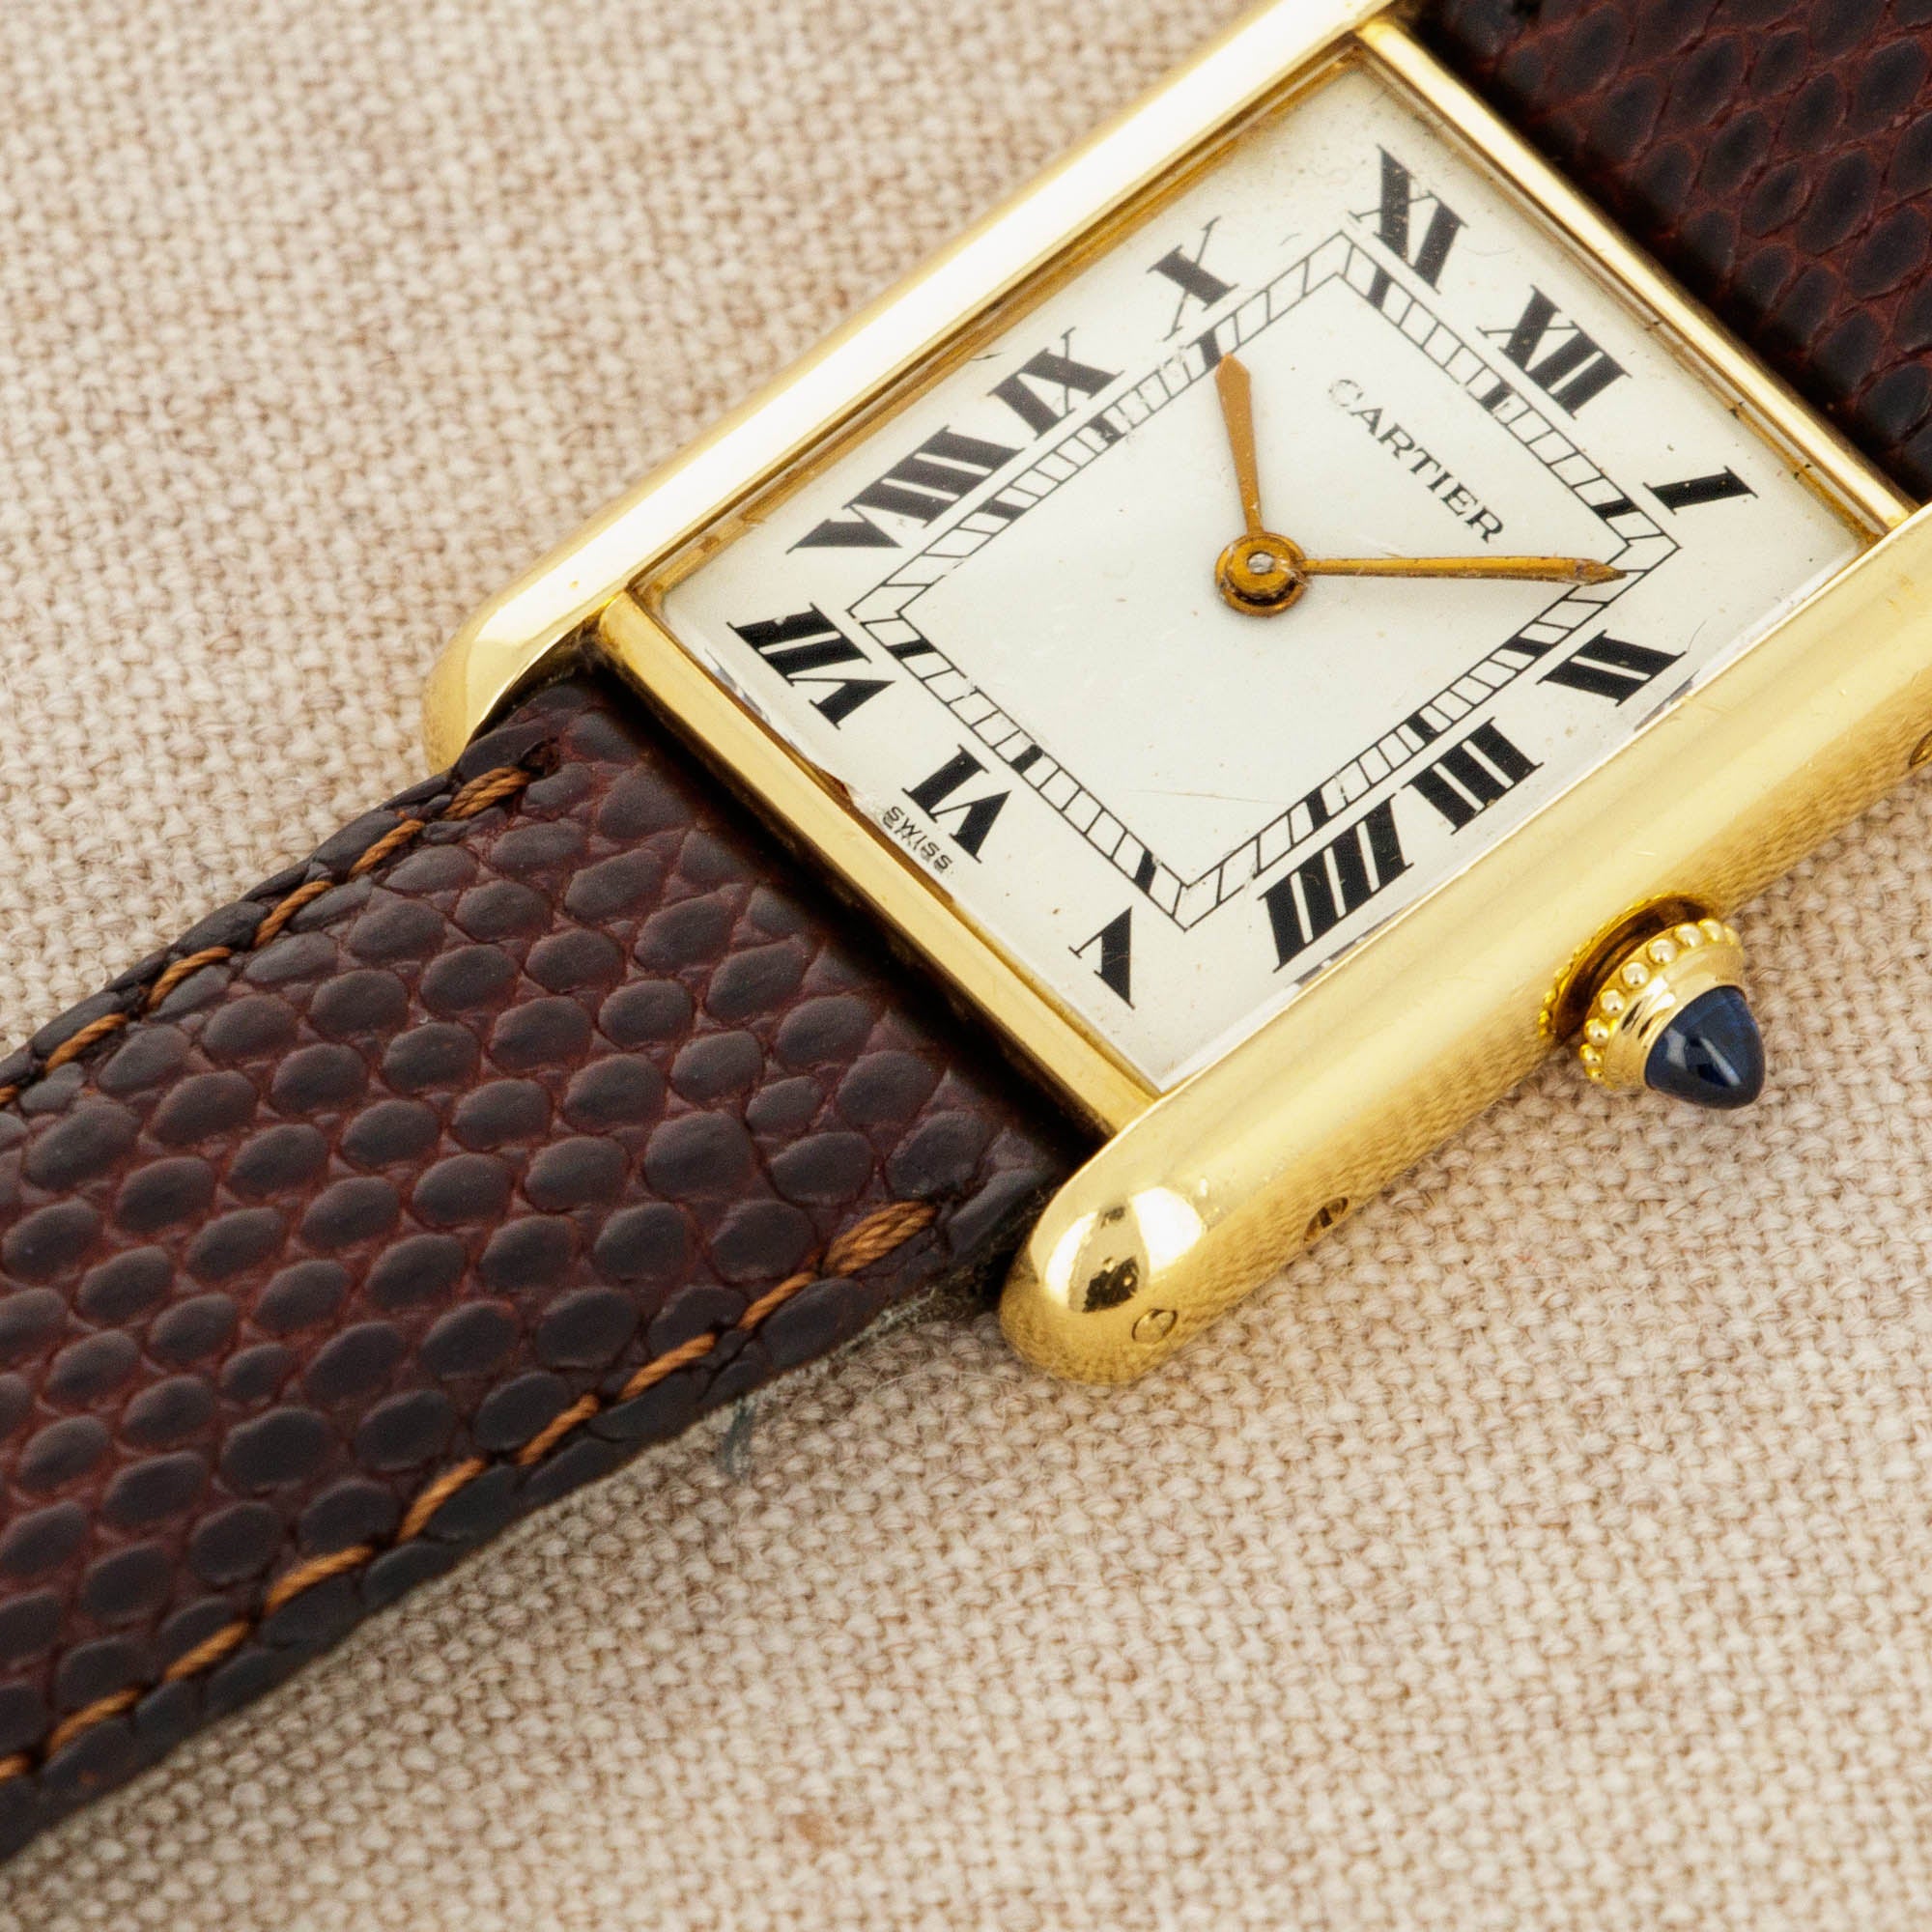 Cartier - Cartier Yellow Gold Tank Louis - The Keystone Watches